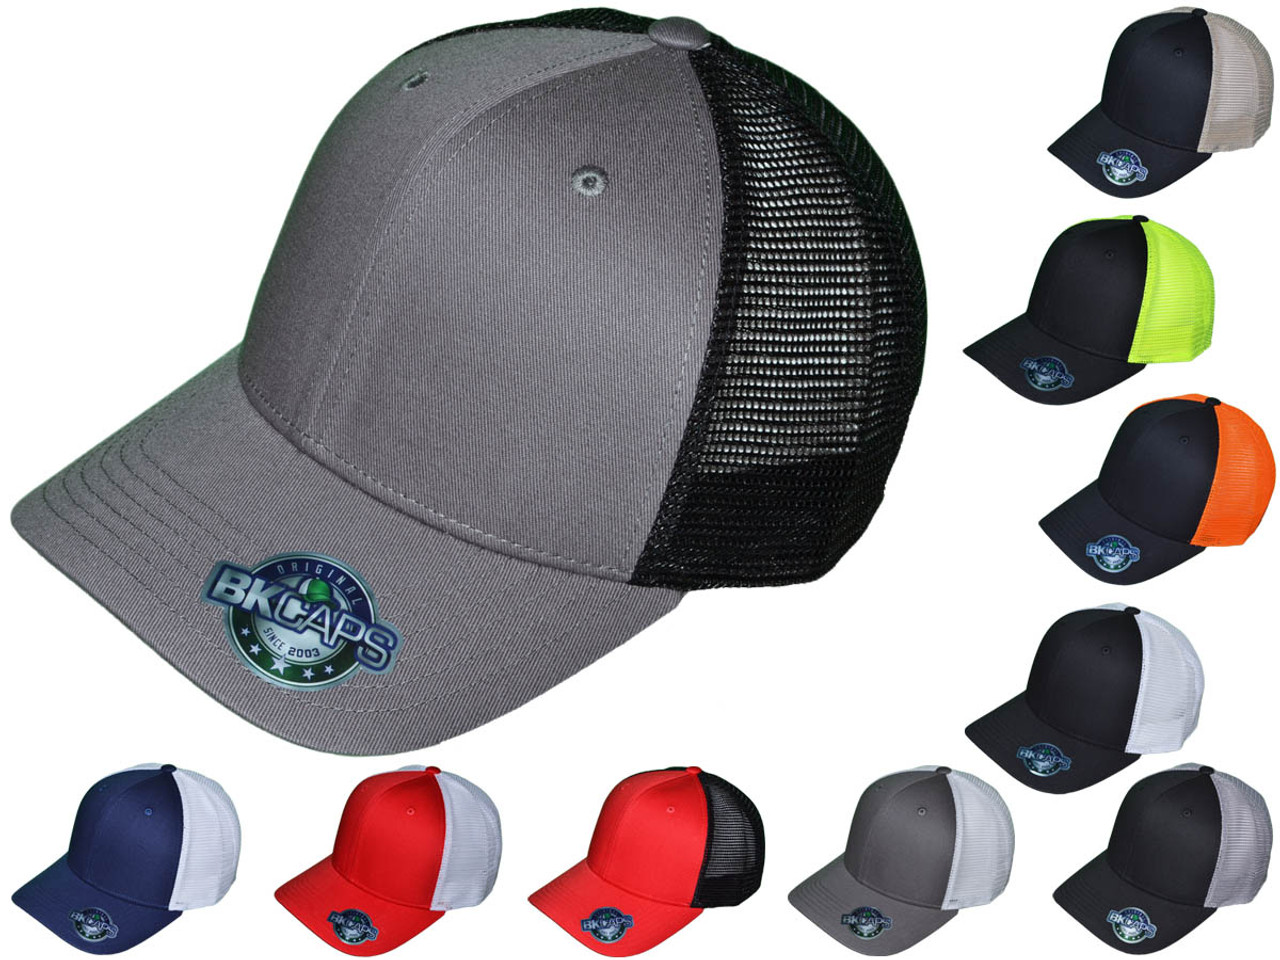 https://cdn11.bigcommerce.com/s-qhlg41l/images/stencil/1280x1280/products/5312/34421/buckwholesale-trucker-hat-structured-black-underbill-premium-cheap-good-quality-bk-caps-162-black-all-colors__51793.1603123428.jpg?c=2